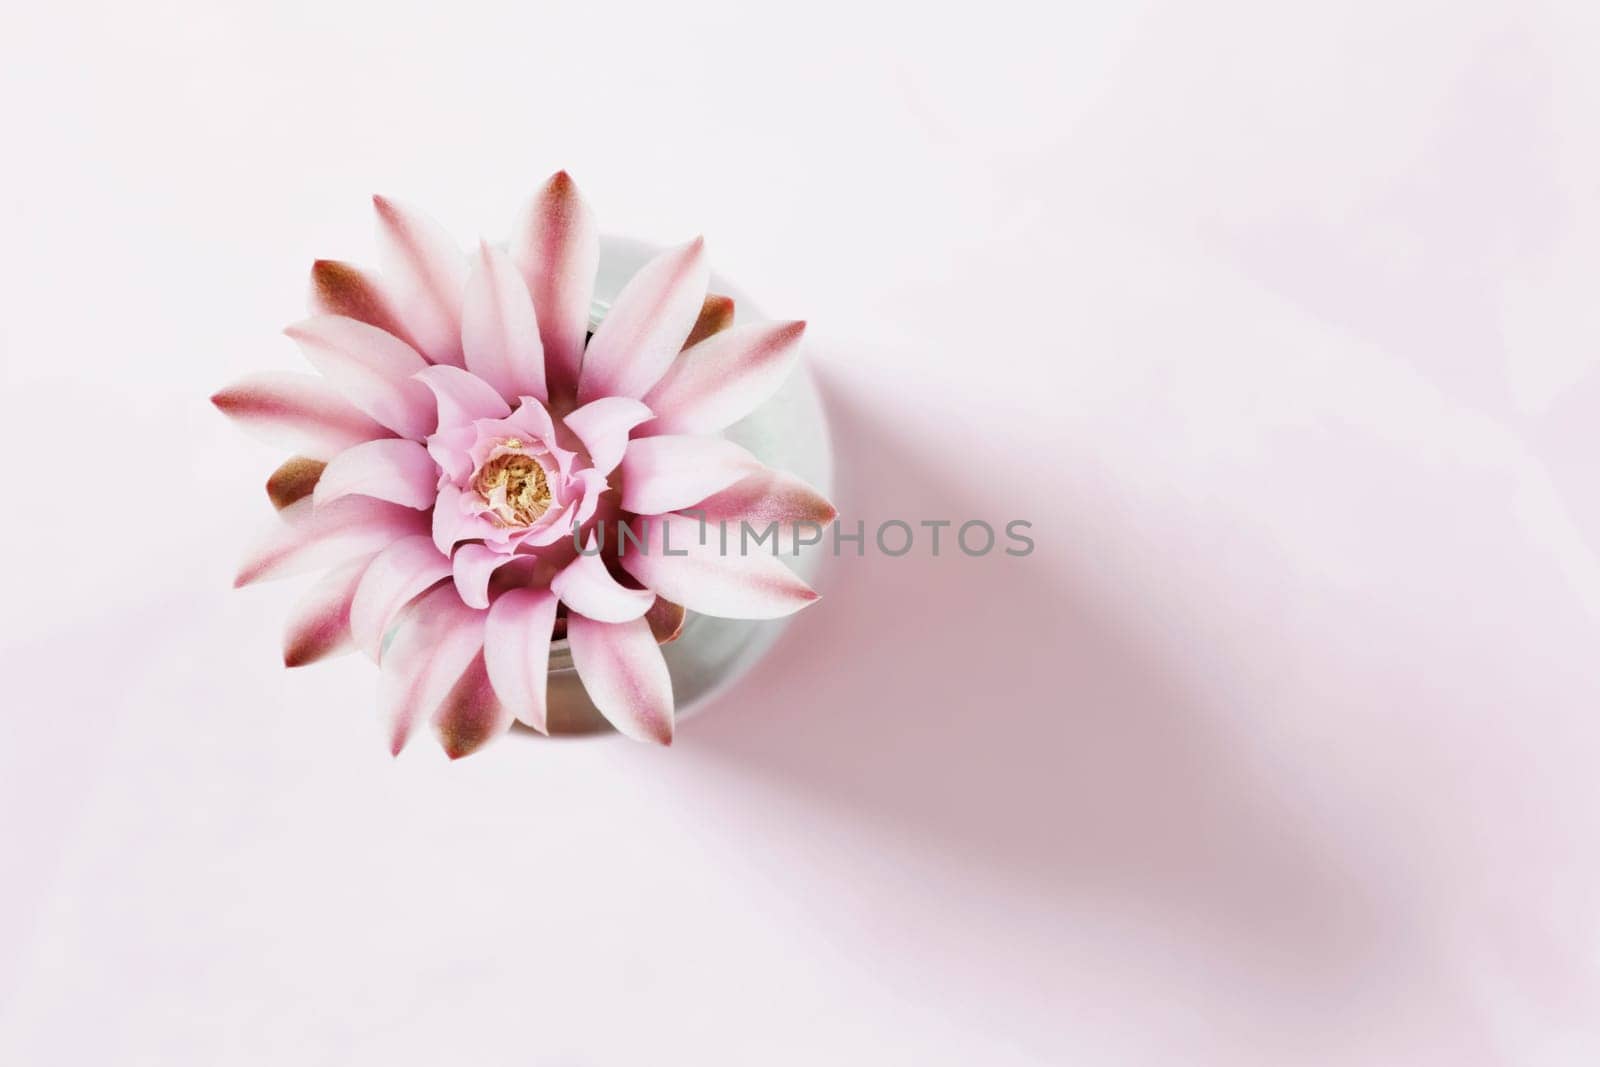 Pink cactus flower  -gymnocalycium  by victimewalker